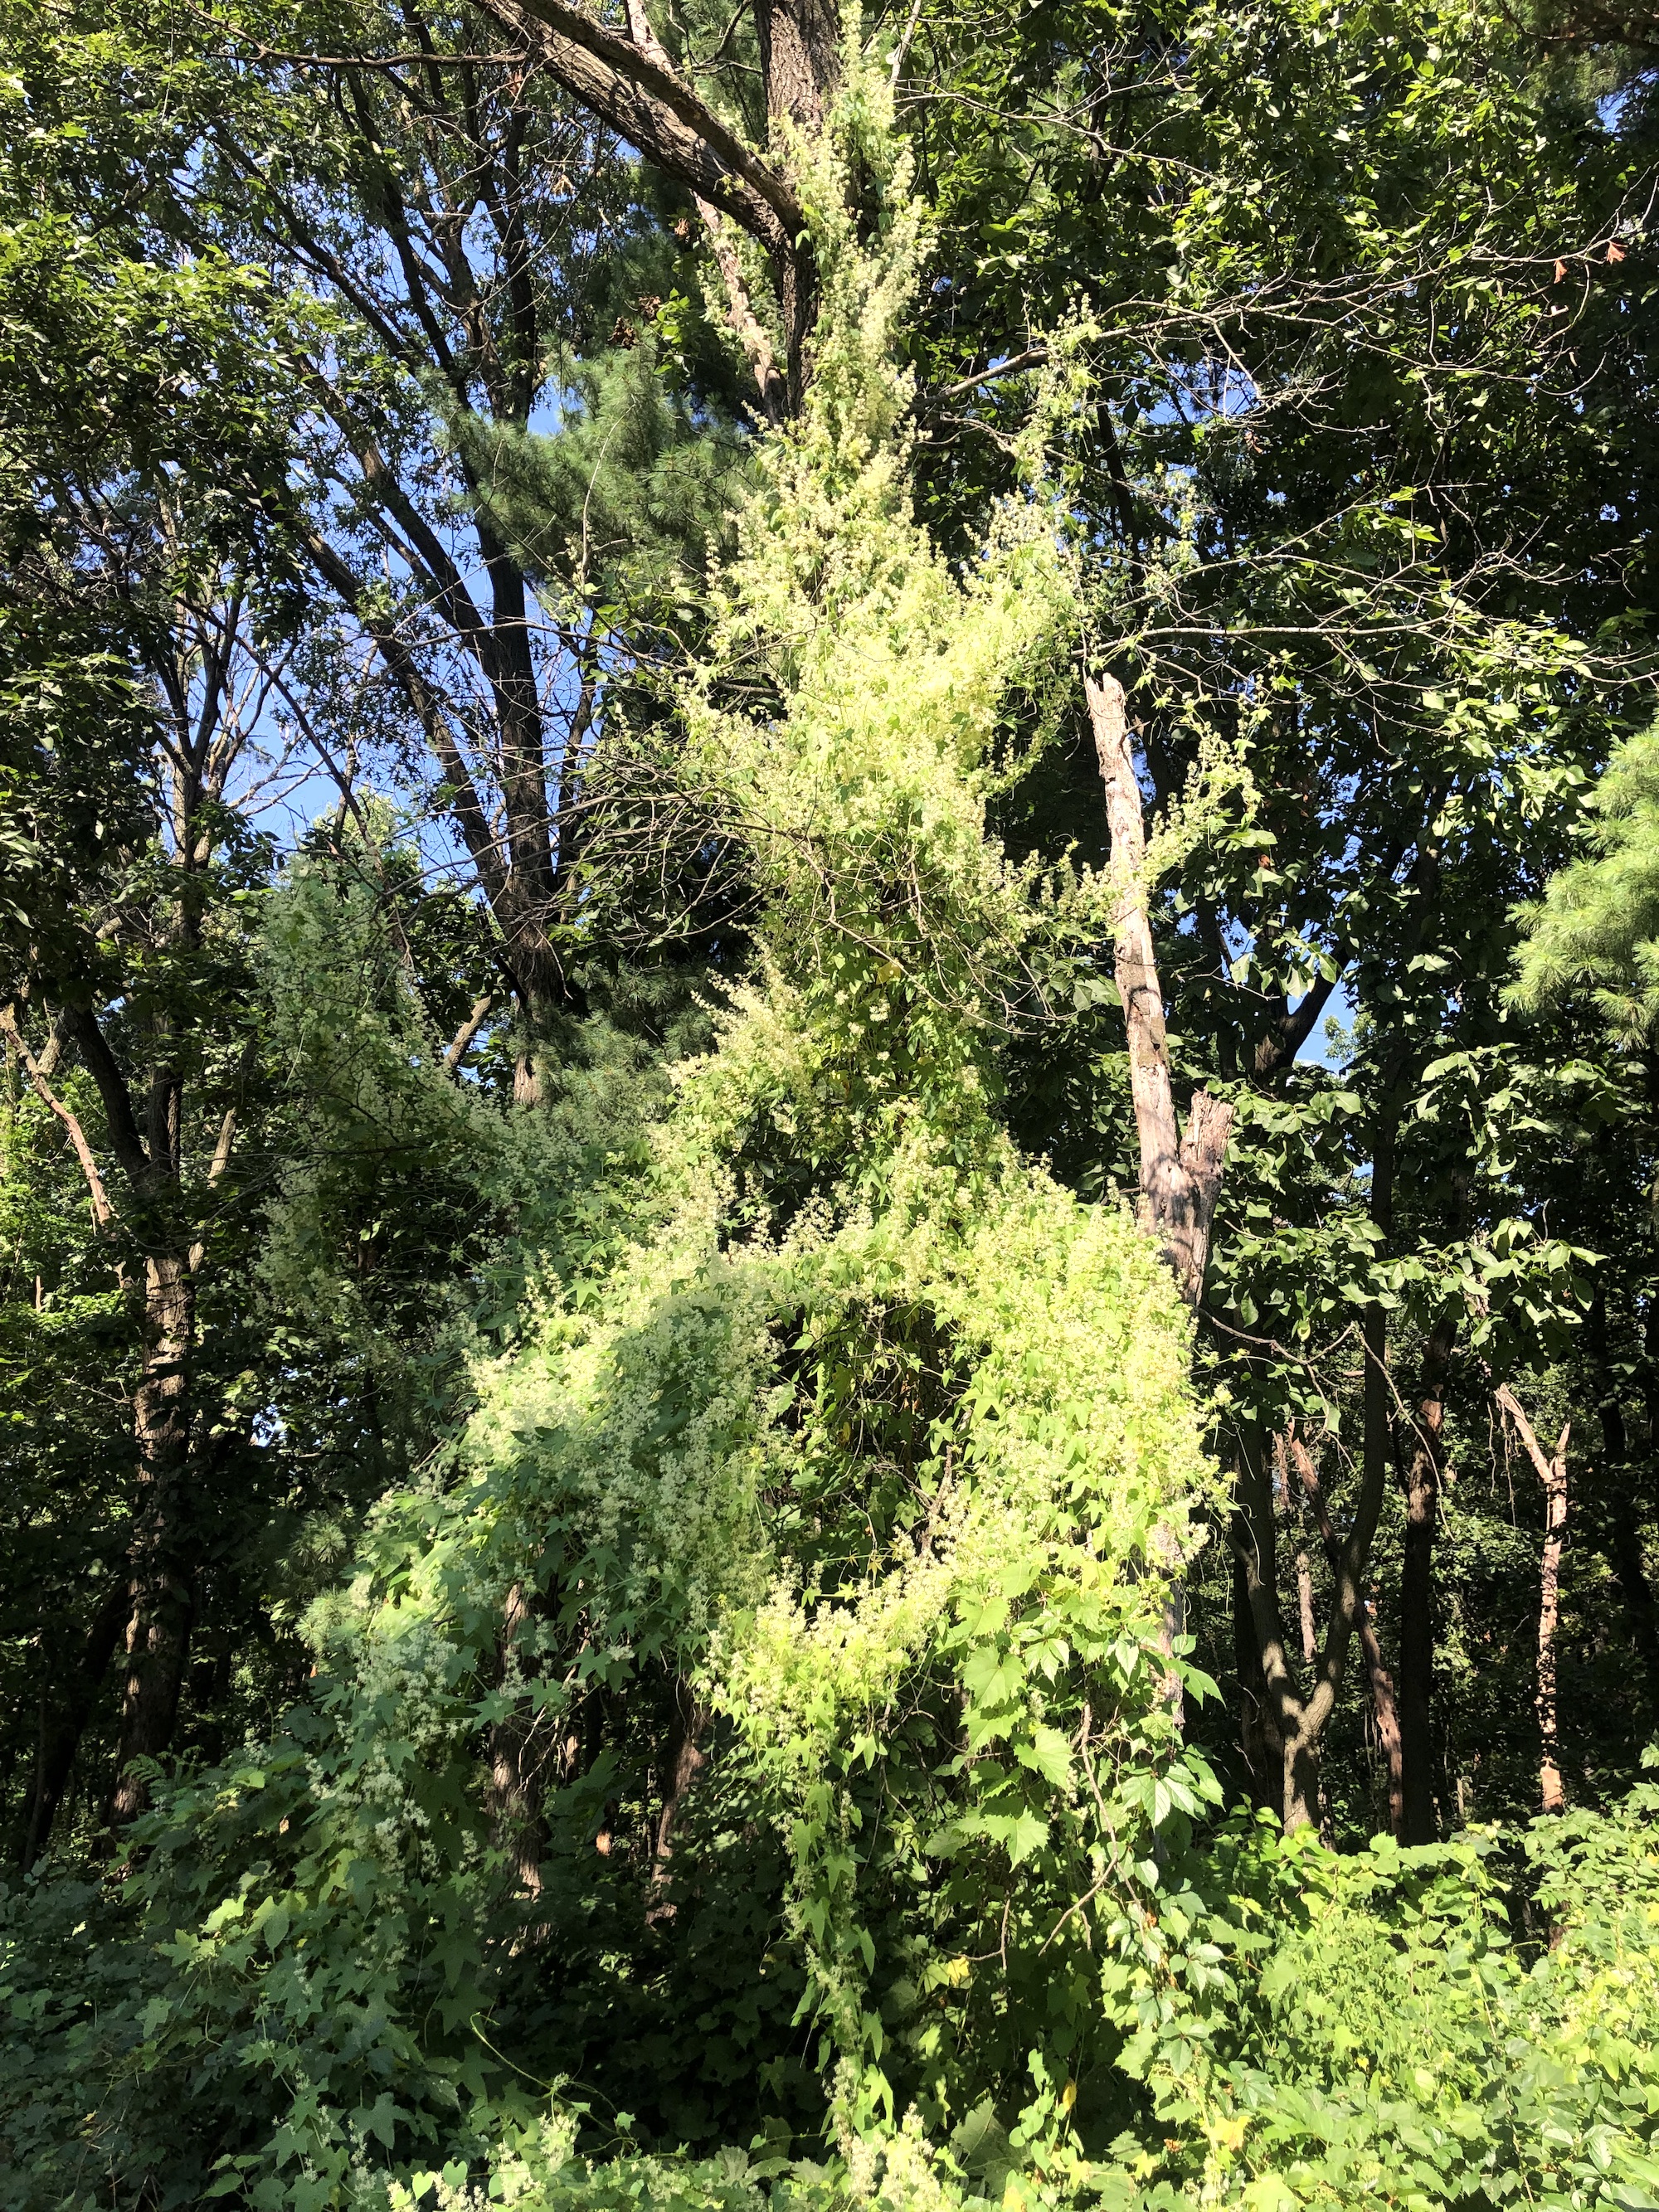 Wild Cucumber climbing up tree in UW Arboretum along Arboretum Drive in Madison, Wisconsin on August 23, 2022.